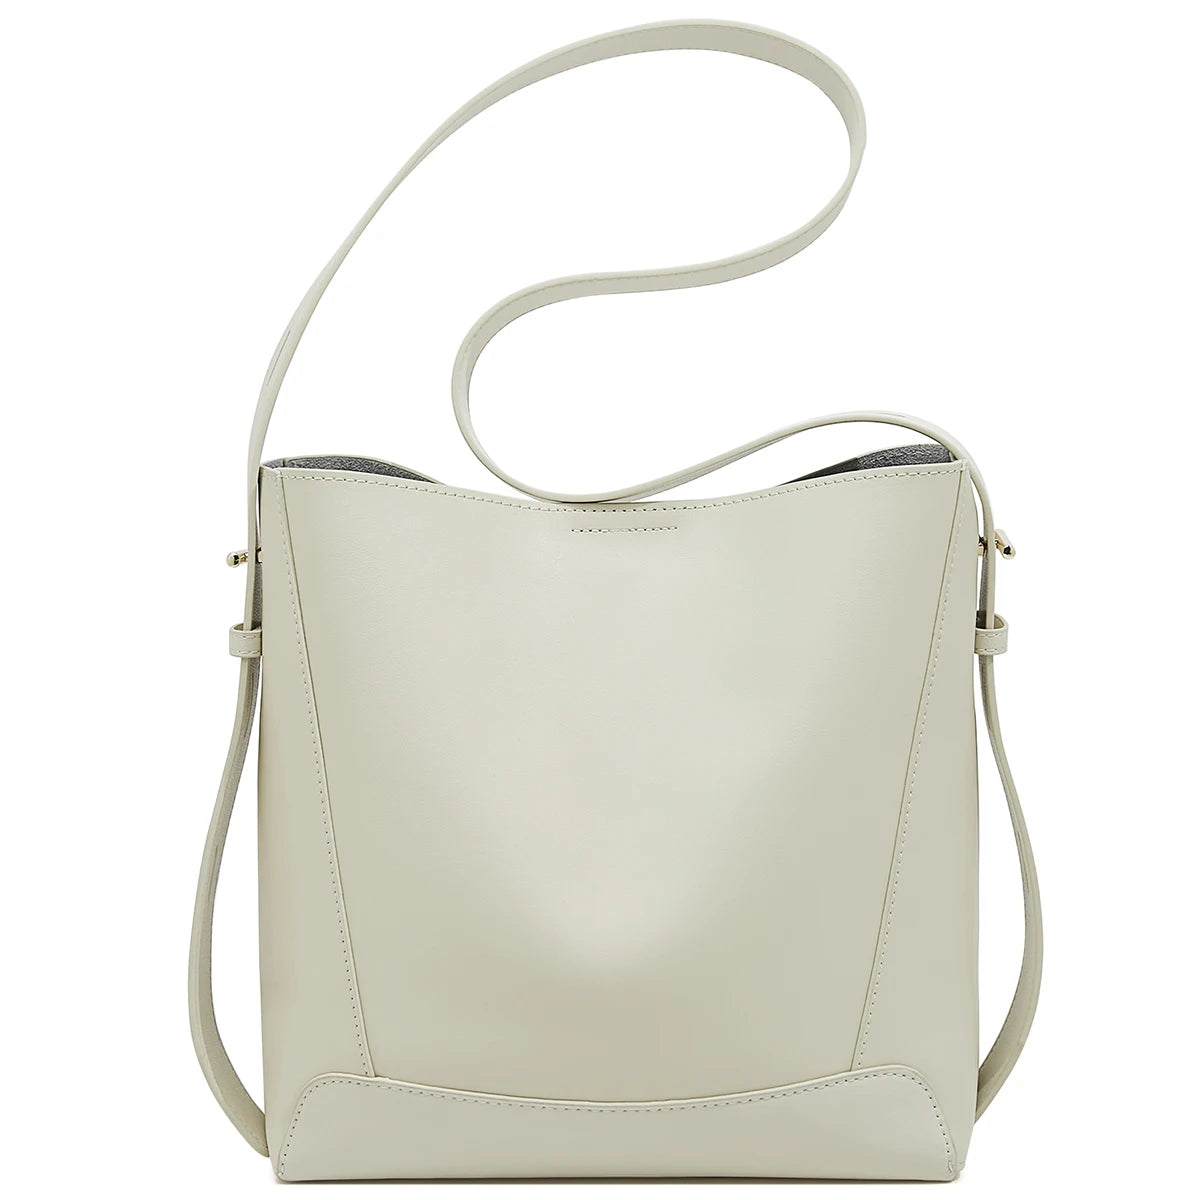 FOXER Lady Fashion Retro Shoulder Bag Large Capacity Beige1